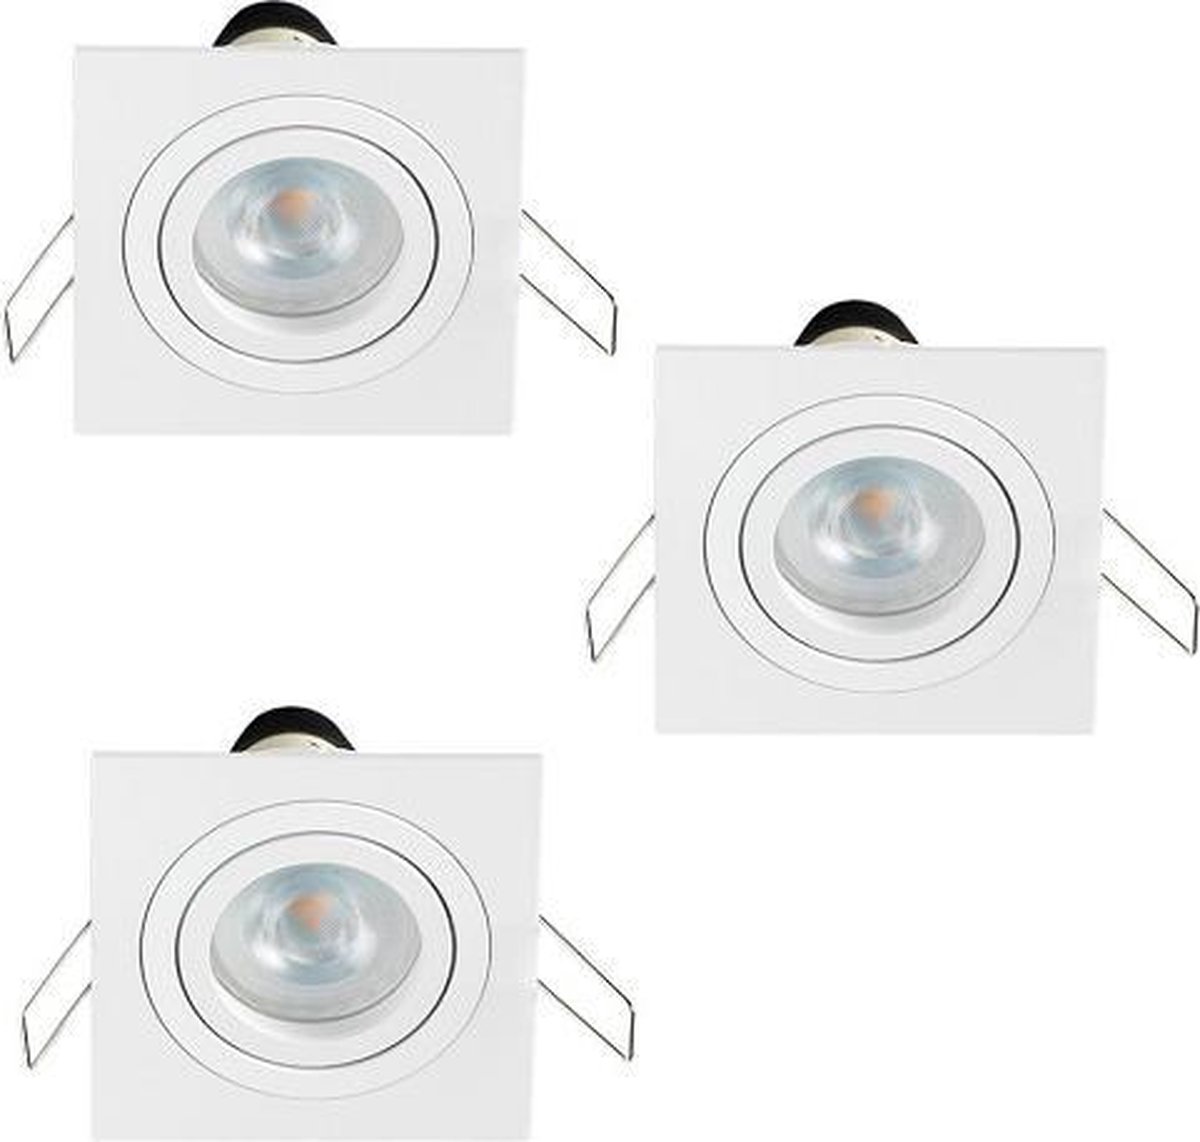 LED inbouwspot Coblux - wit - set 3 inbouwspots GU10 - inbouwspotje - downlights - plafondspots - 12 watt - vierkant - dimbaar - kantelbaar - richtbaar - 230V - IP20 - warmwit